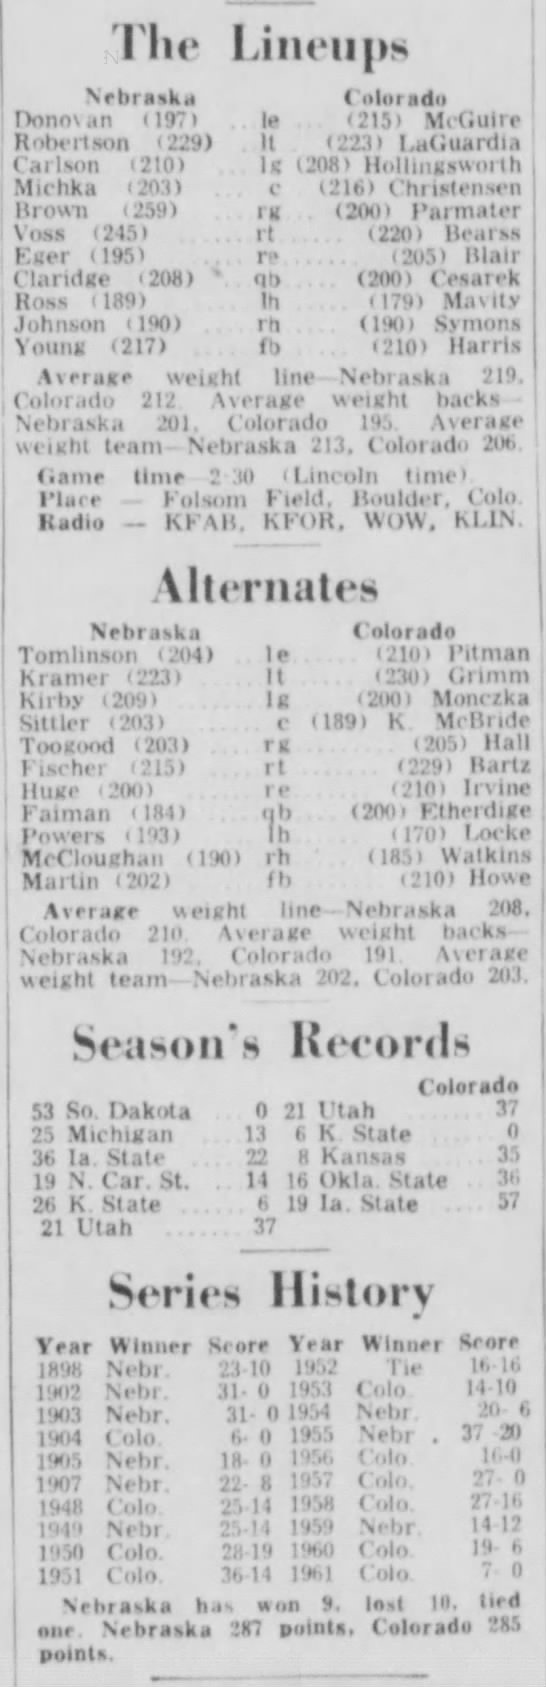 1962 Nebraska-Colorado football game lineups - 